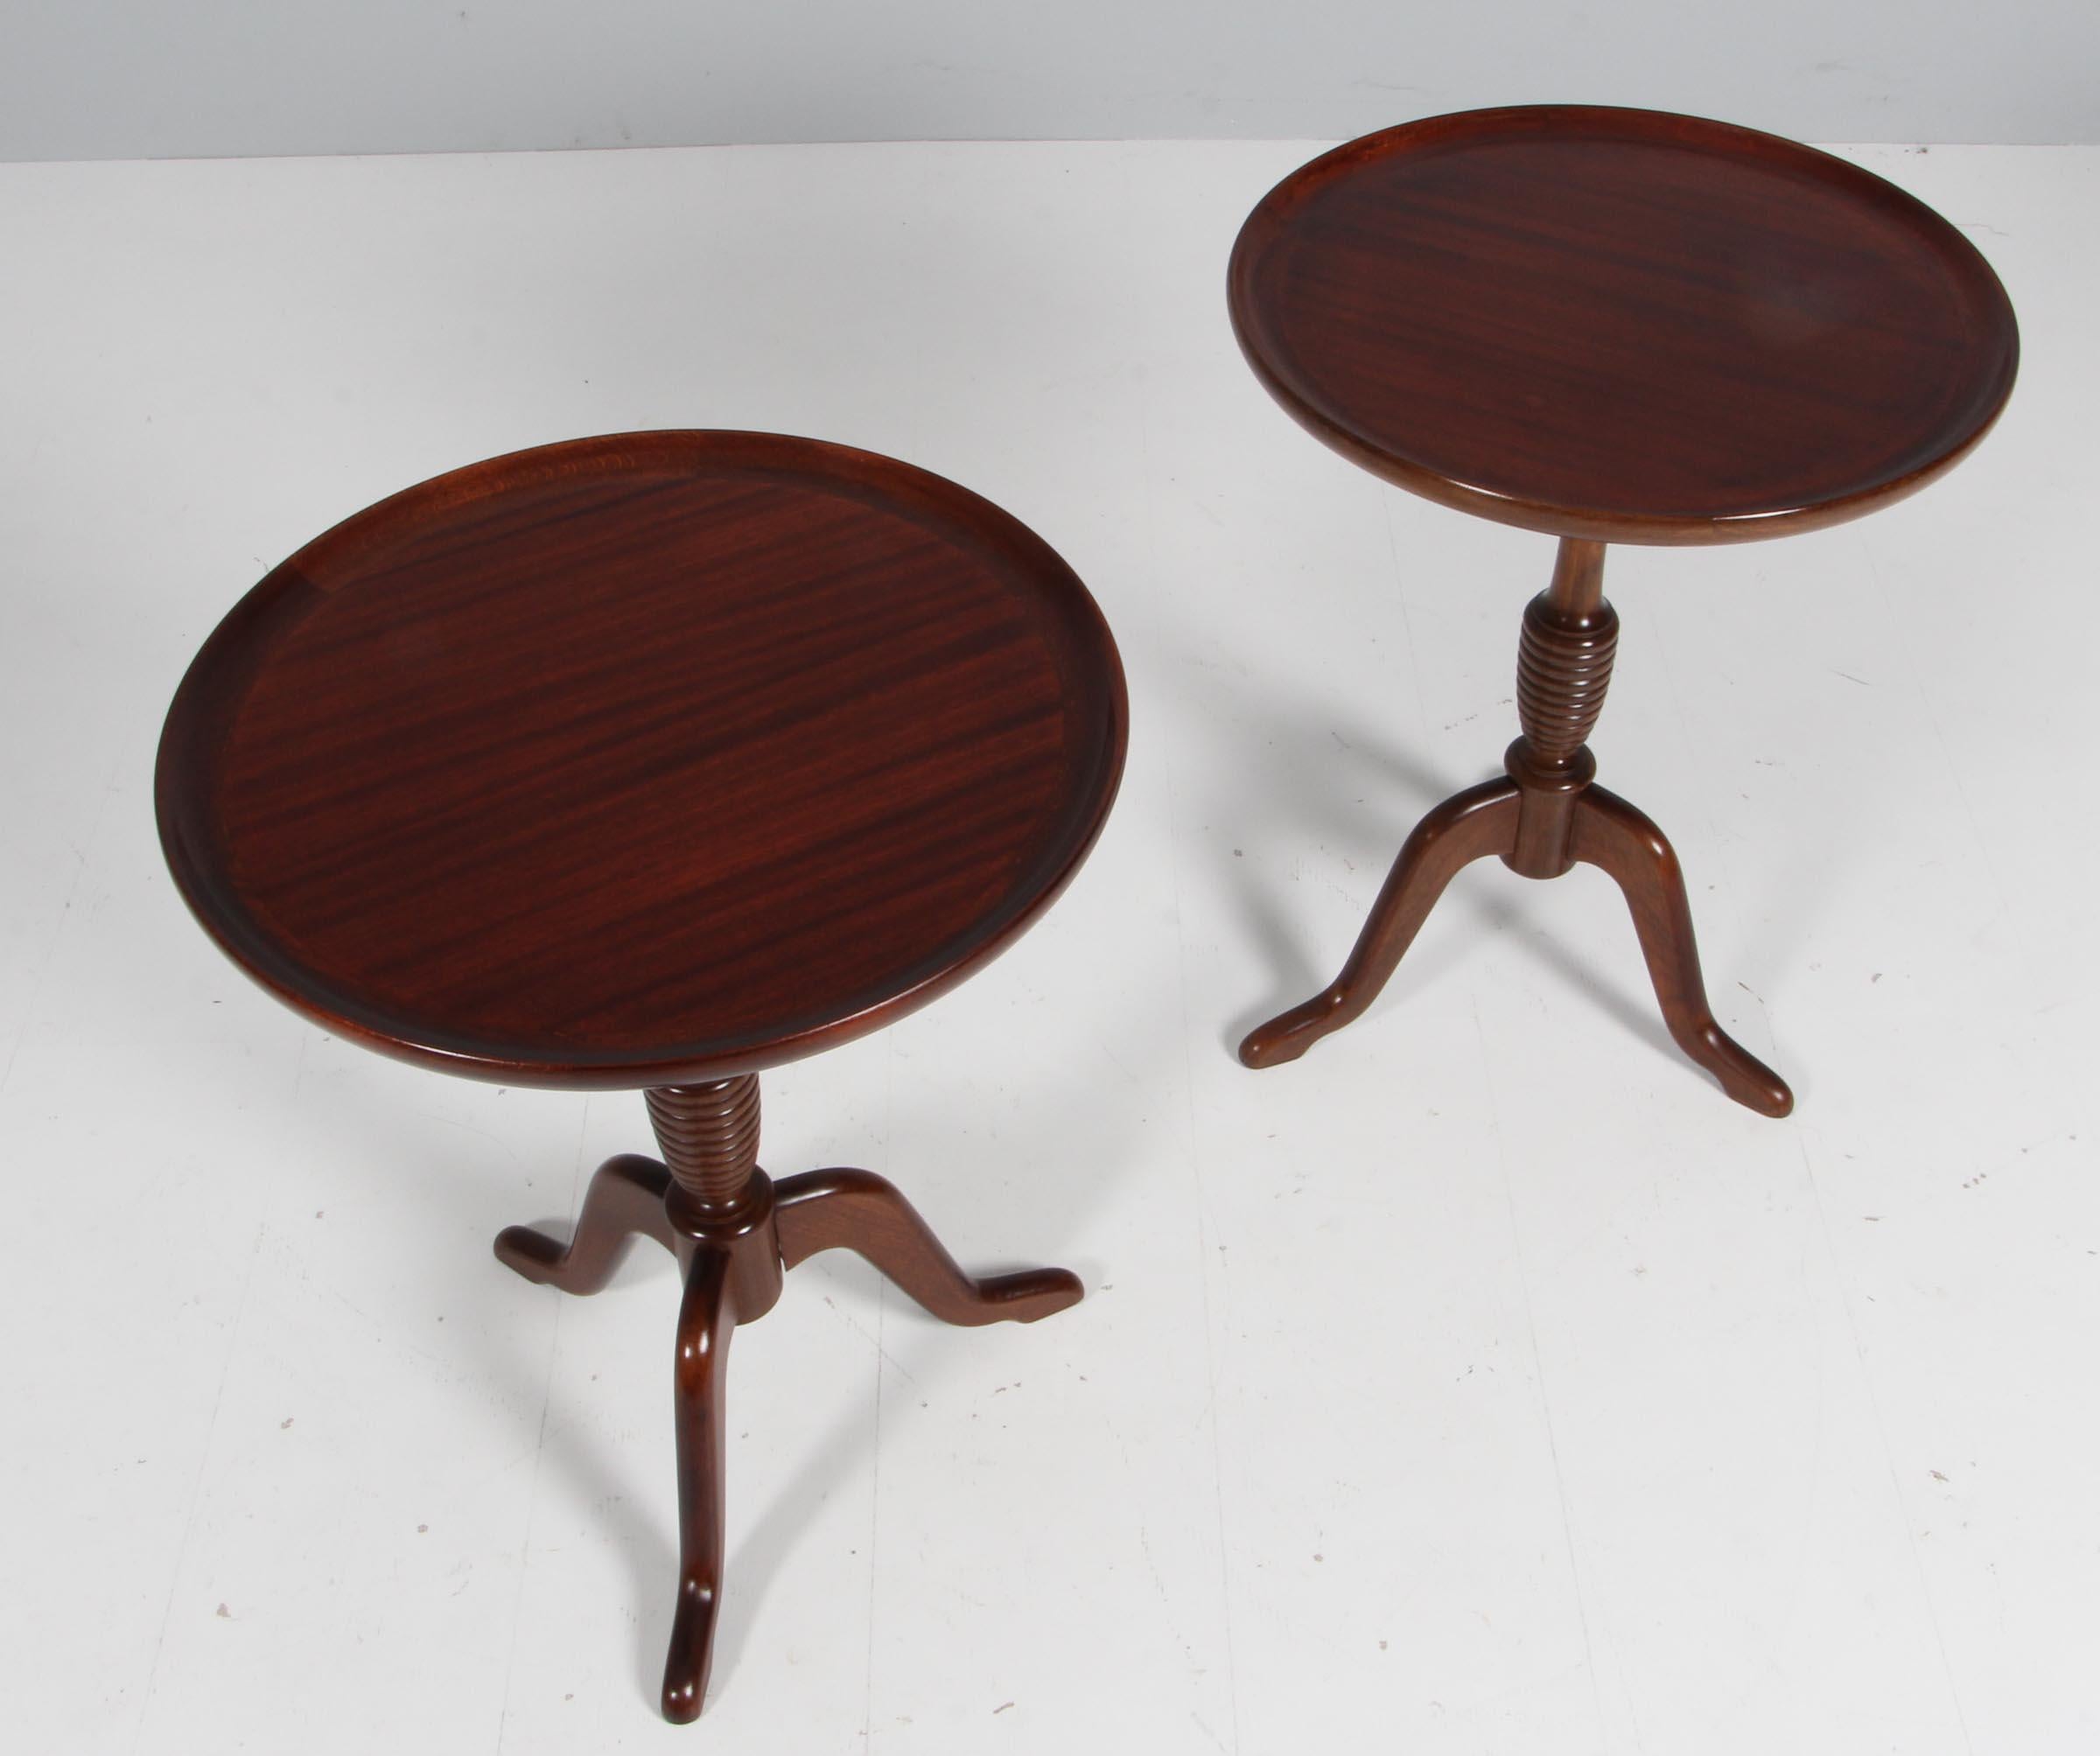 Anton Kildeberg side tables in mahogany.

Made in the 1950s.